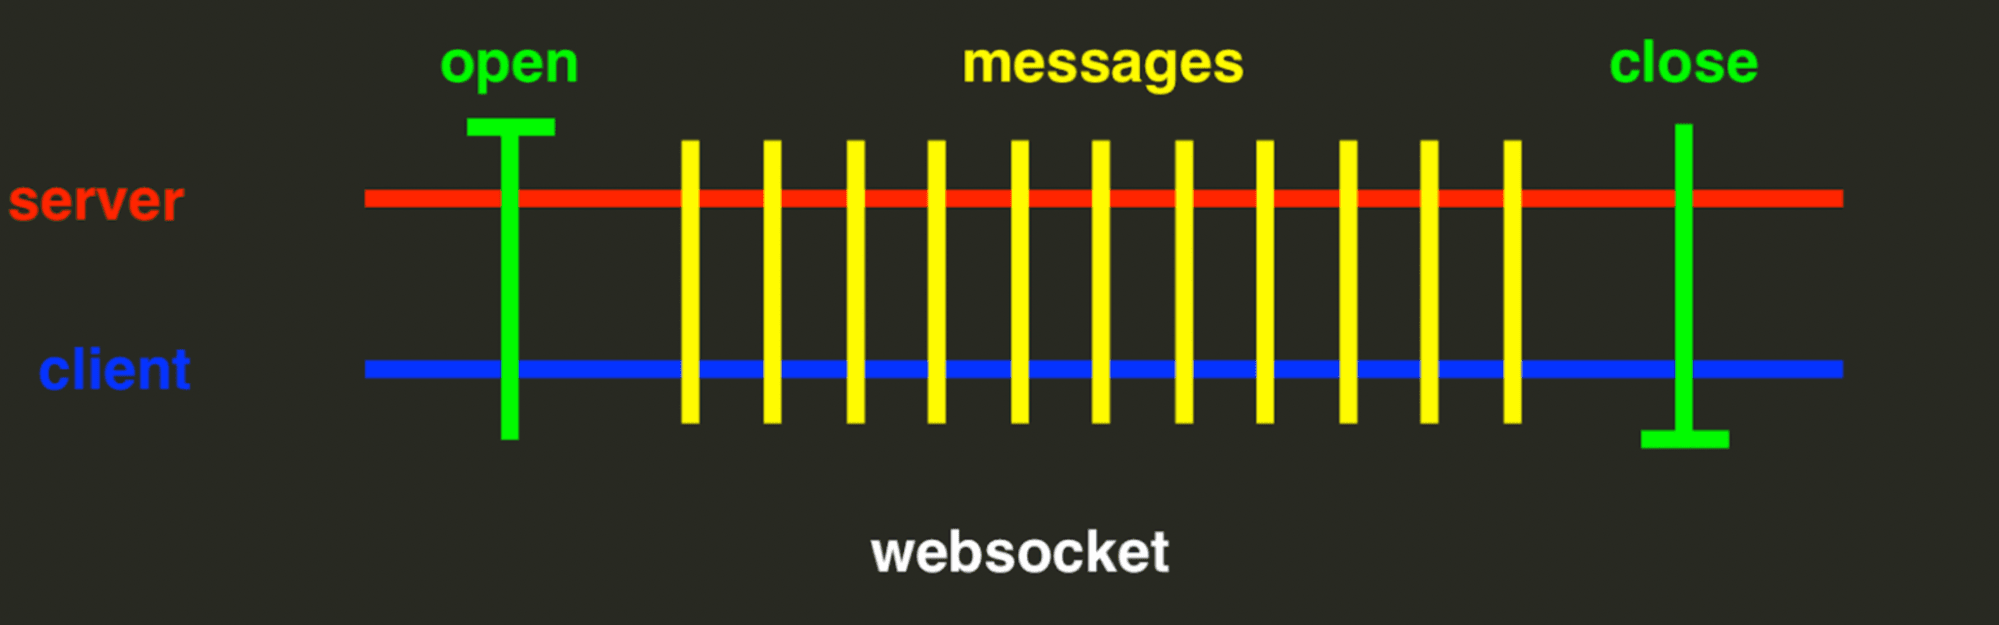 websocket protocol client server messages schema - image15.png